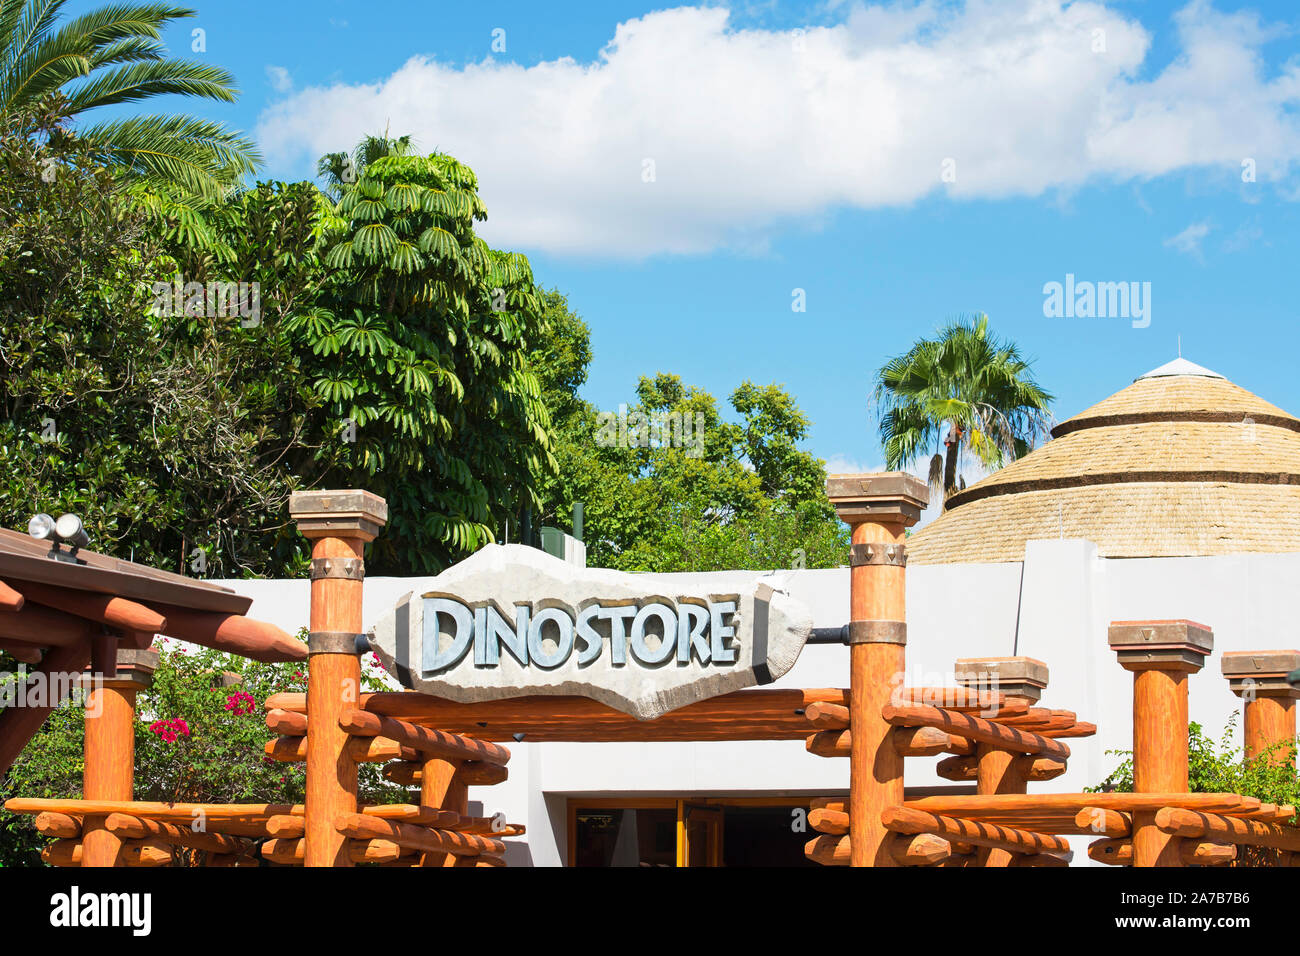 Dinostore à Jurassic Park, Islands of Adventure, Universal Studios Orlando, Floride, USA Banque D'Images